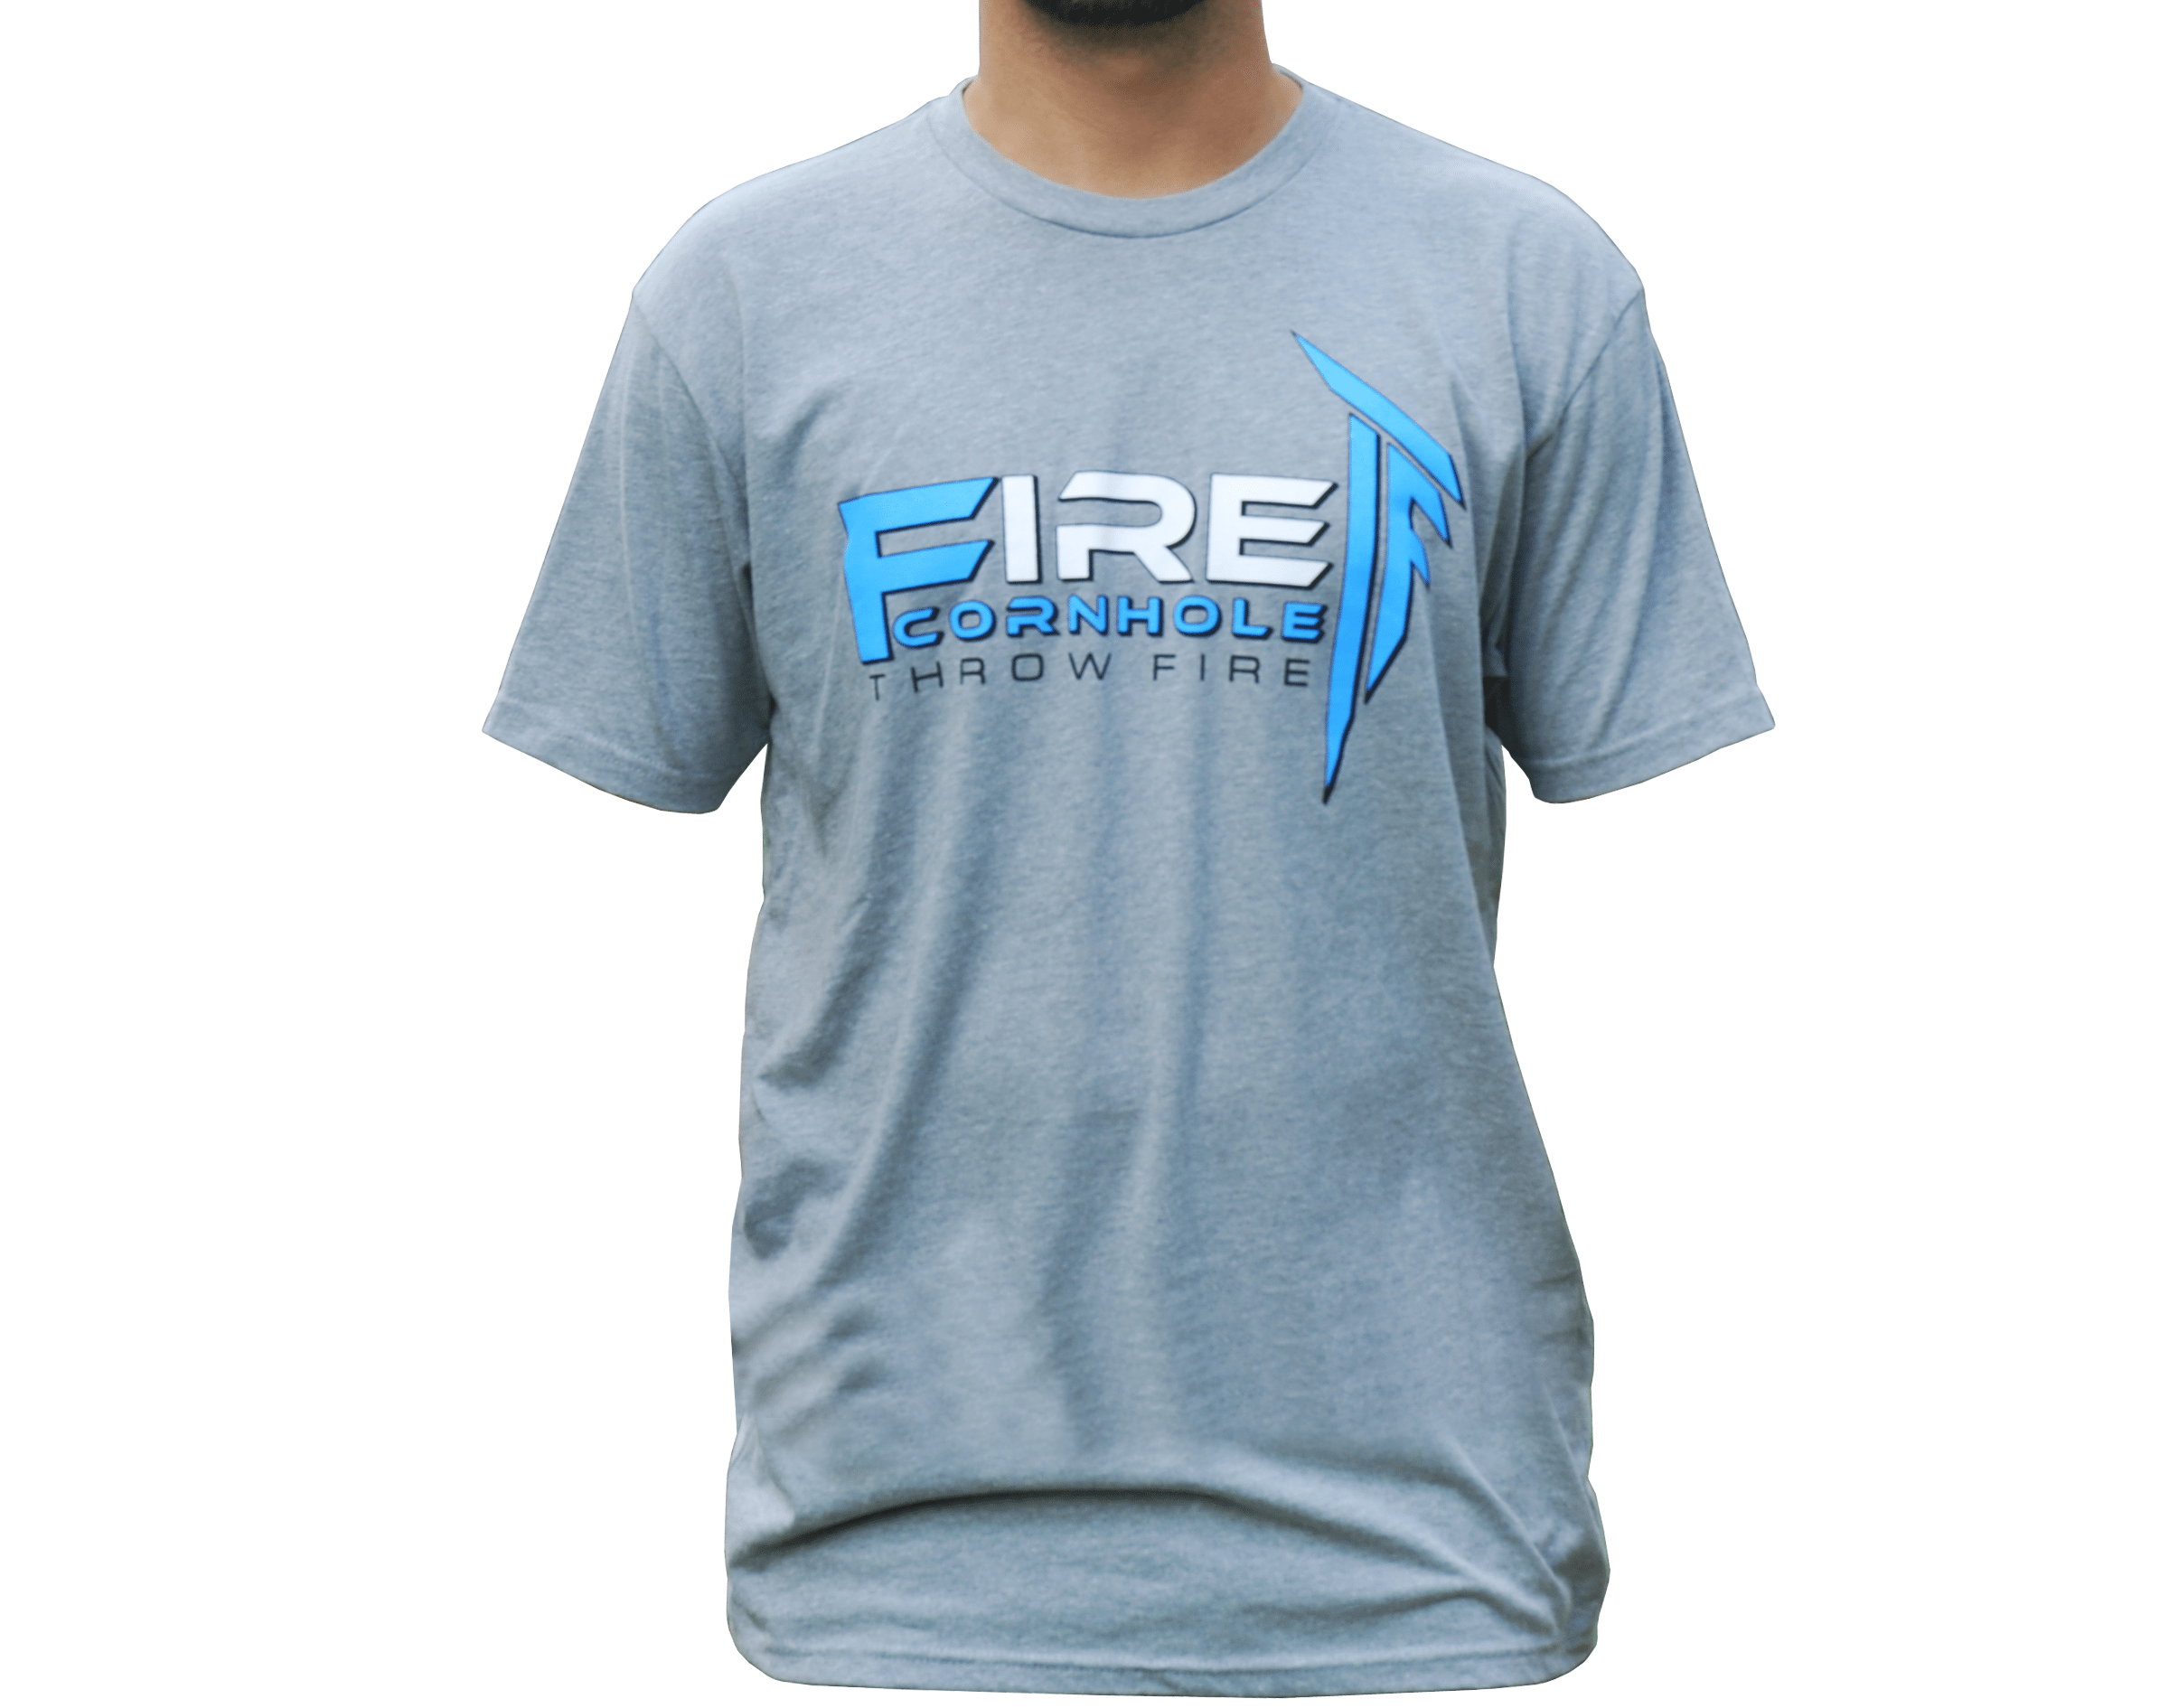 Grey T-shirt with Fire Cornhole logo in light blue